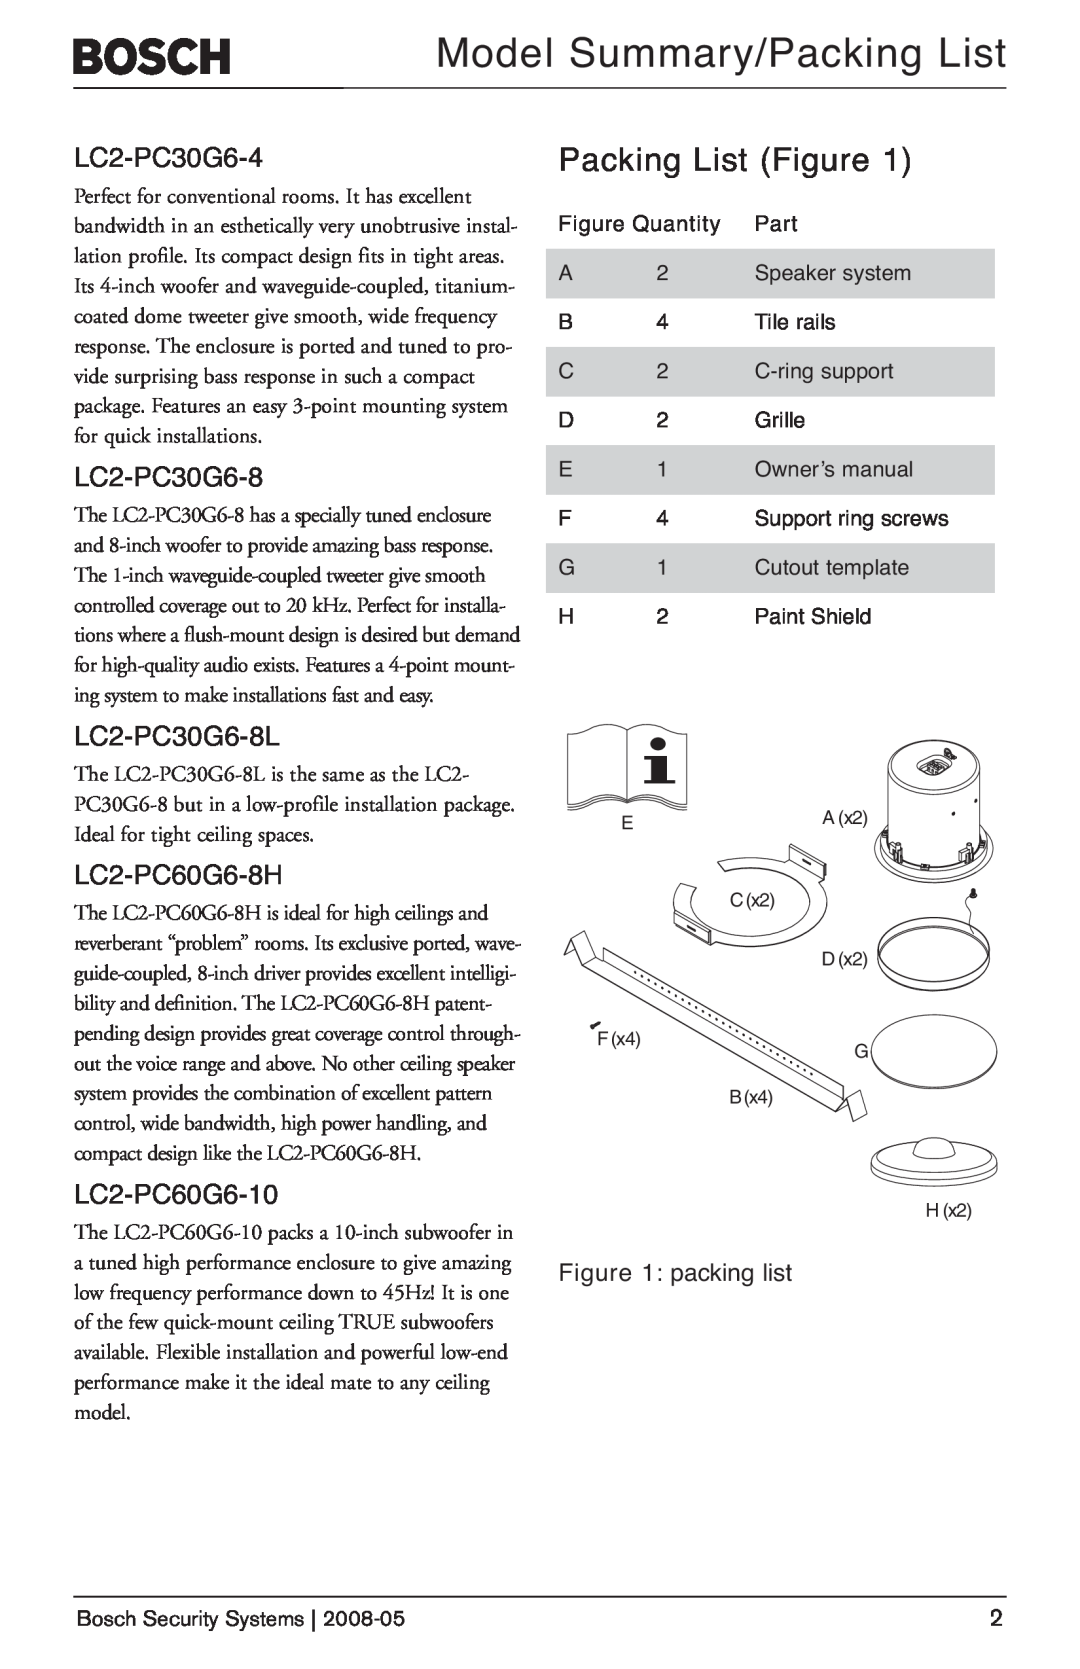 Bosch Appliances LC2-PC30G6-8, LC2-PC60G6-8H Model Summary/Packing List, Packing List Figure, LC2-PC30G6-4, packing list 